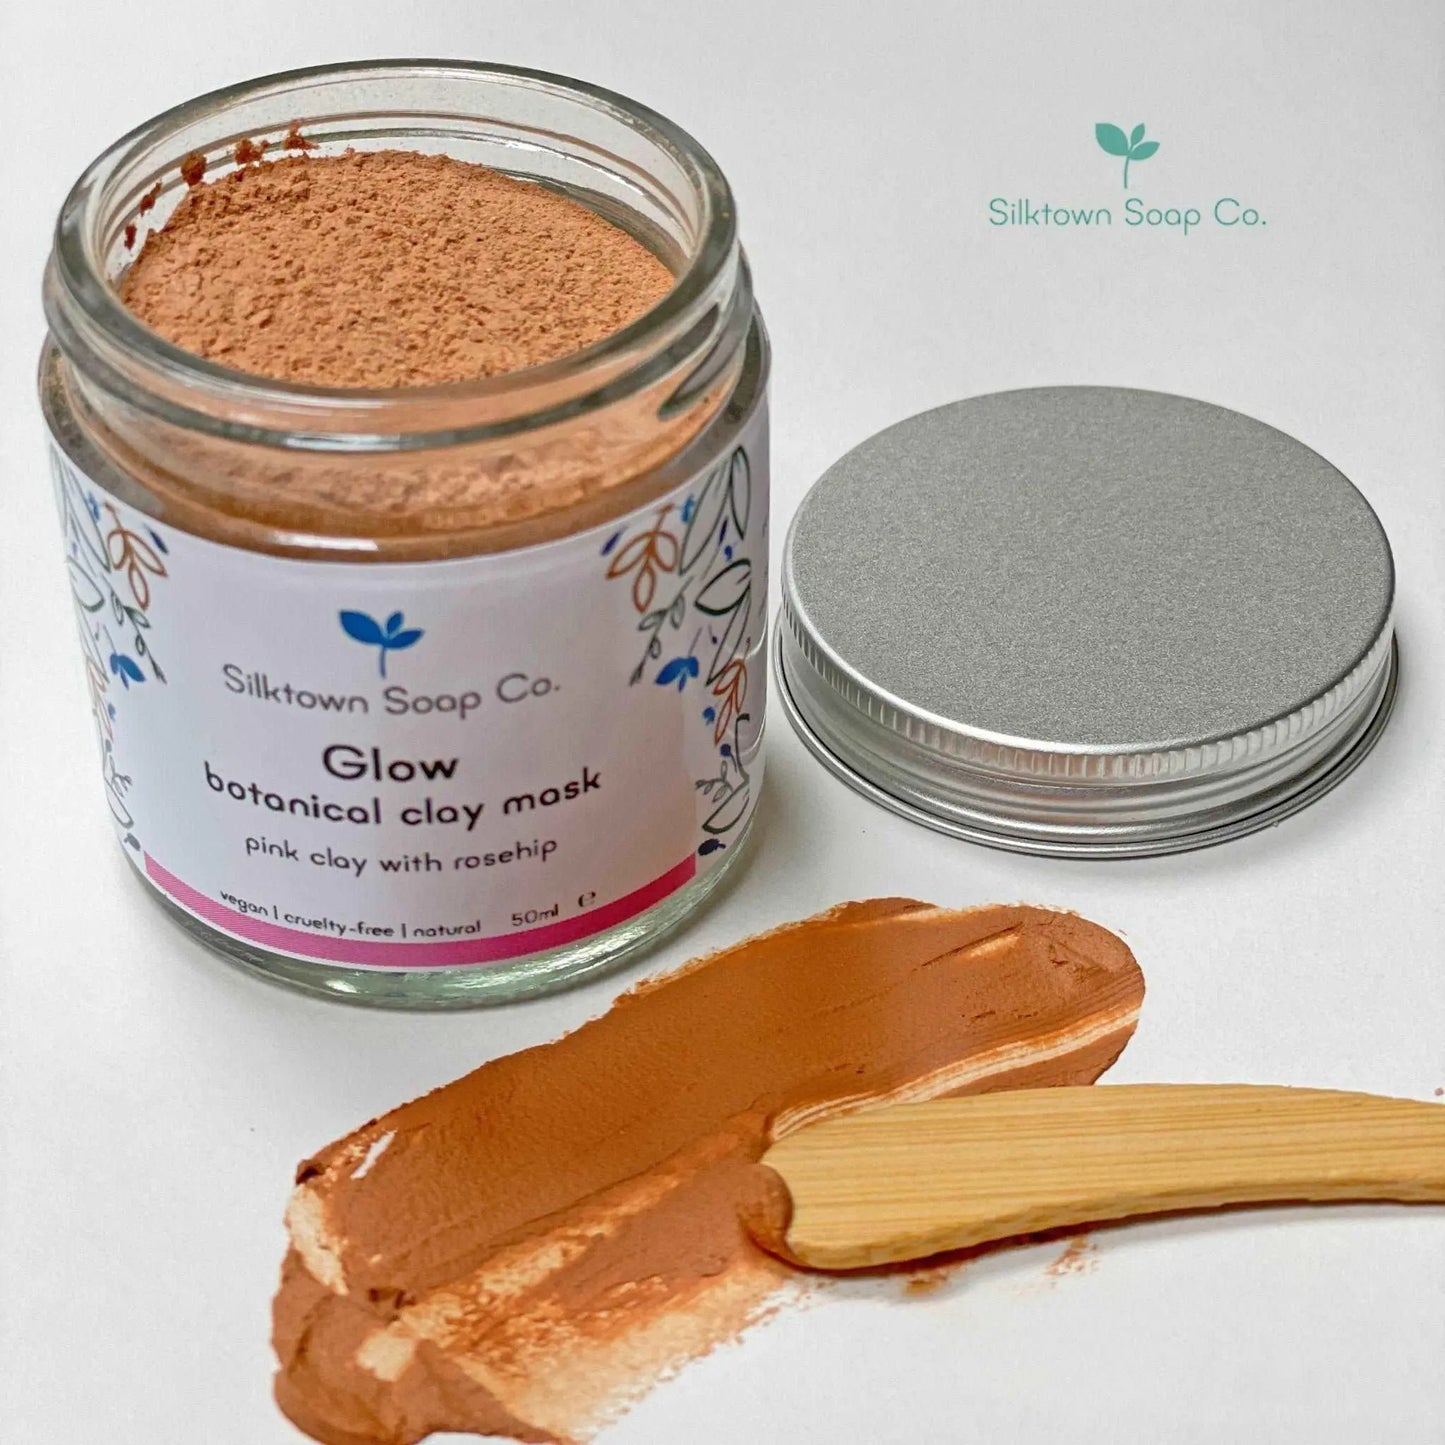 Glow - vegan botanical clay mask - Silktown Soap Company